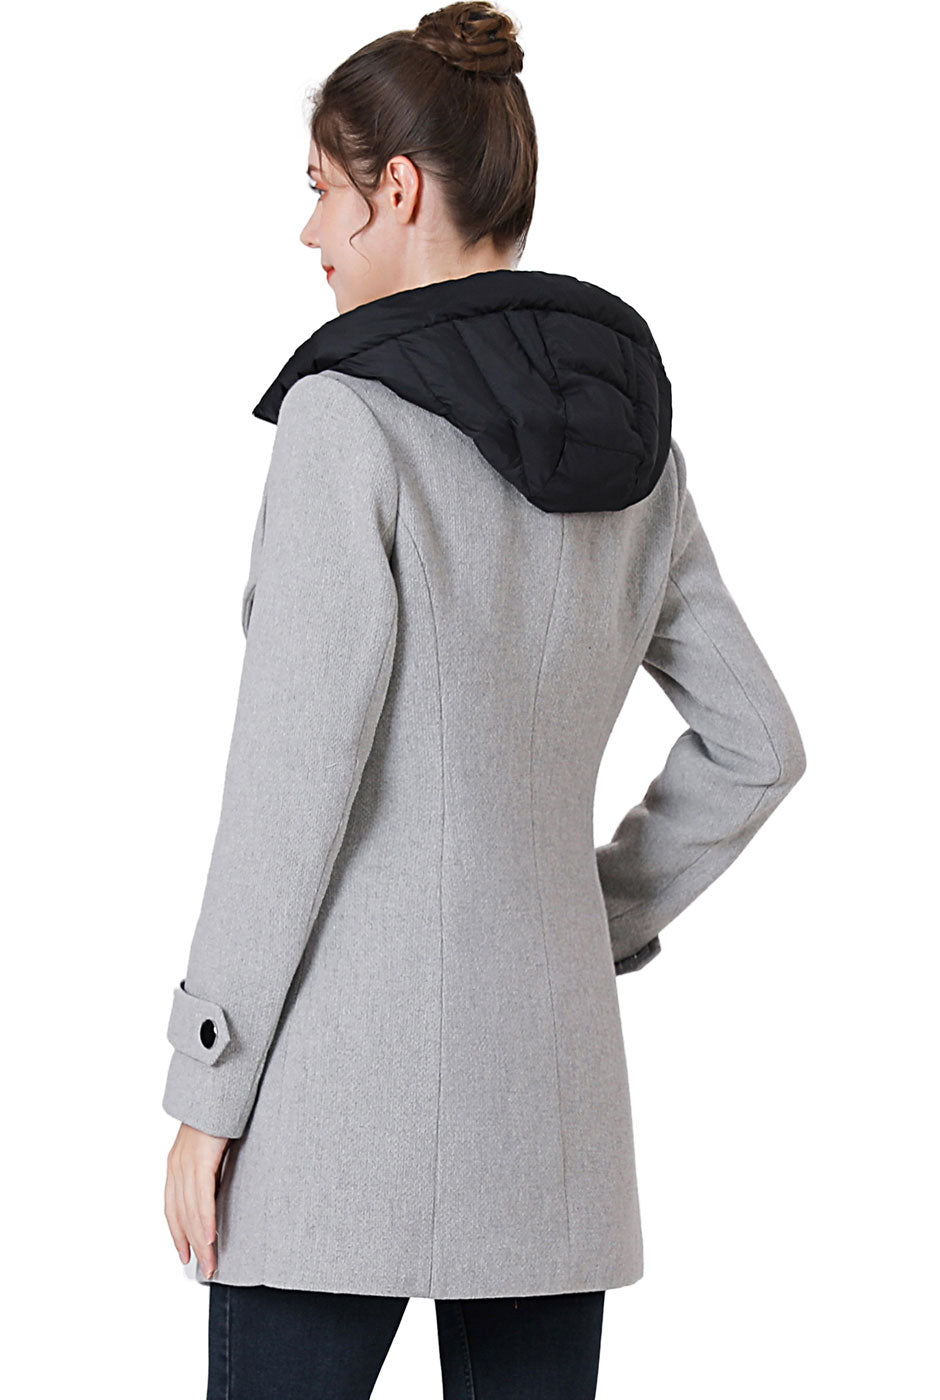 BGSD Women Rue Wool Asymmetric Zipper Coat with Removable Hood